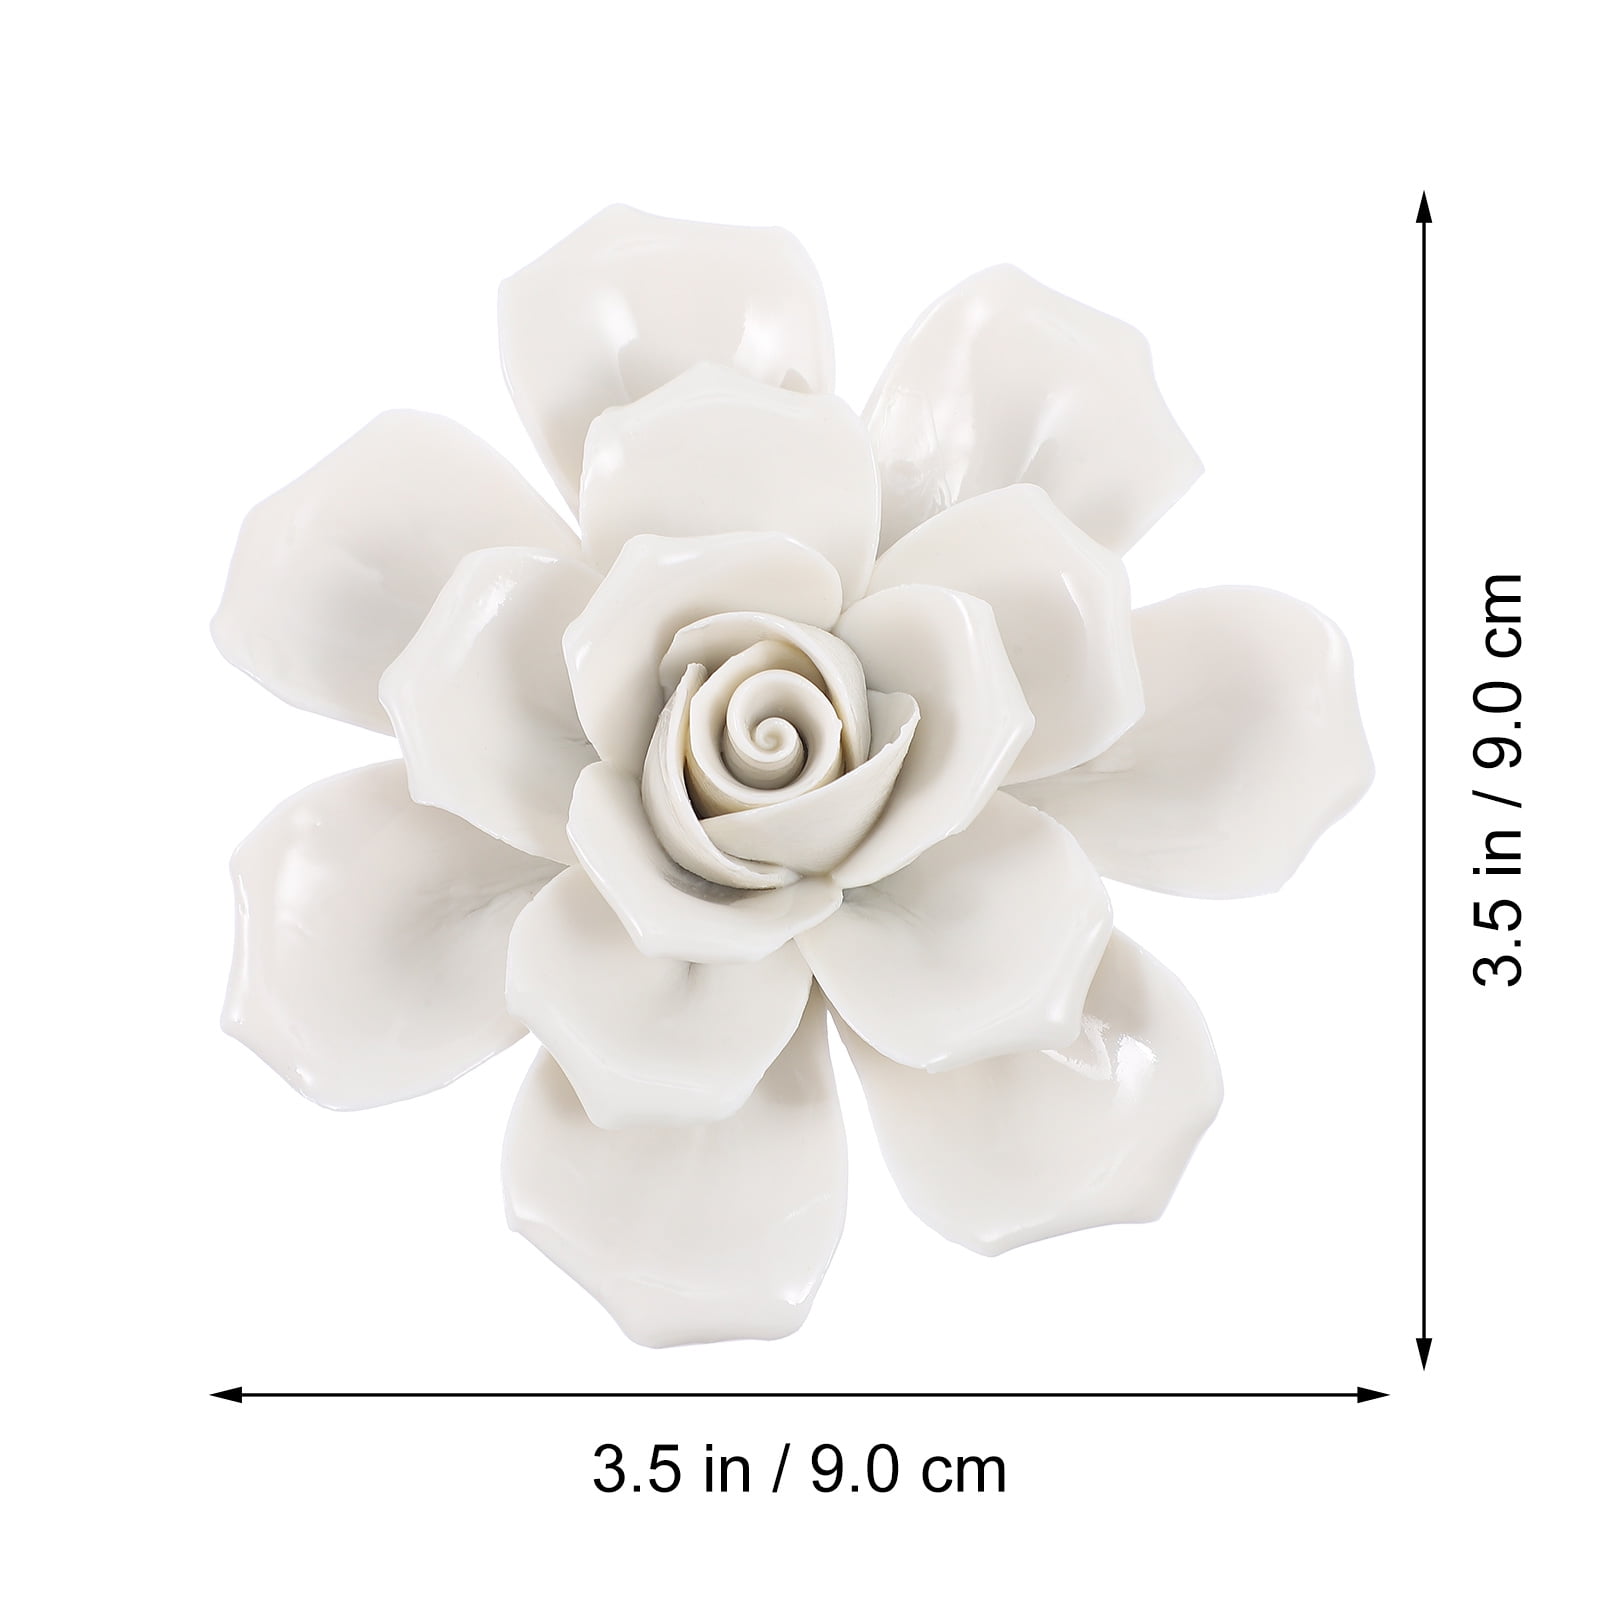 3D Flower Wall Hanging Decor - Ceramic - White - ApolloBox